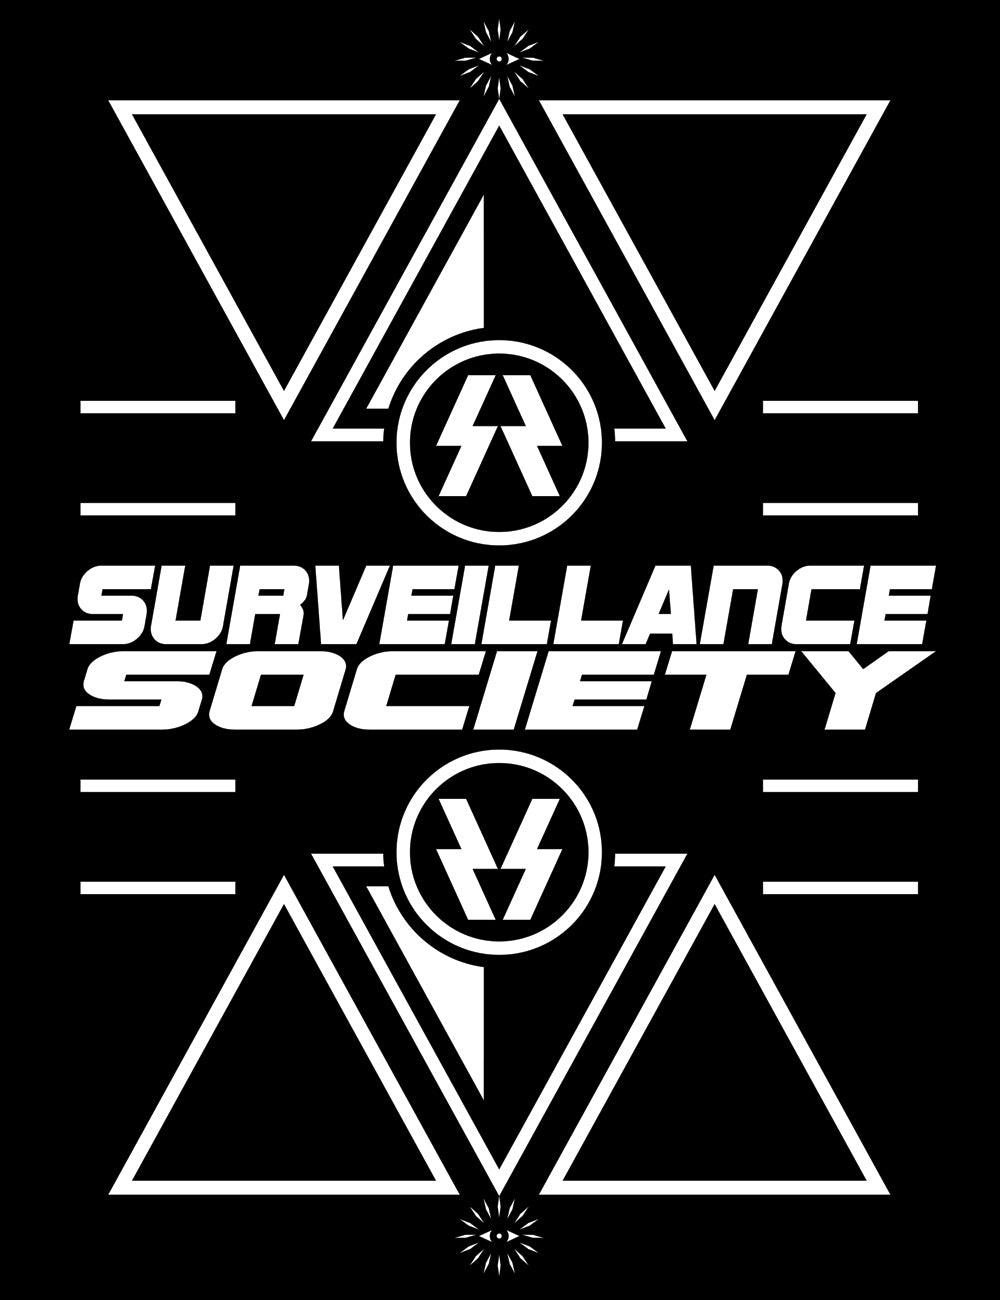 CCTV Surveillance Society Conspiracy Theory T-Shirt